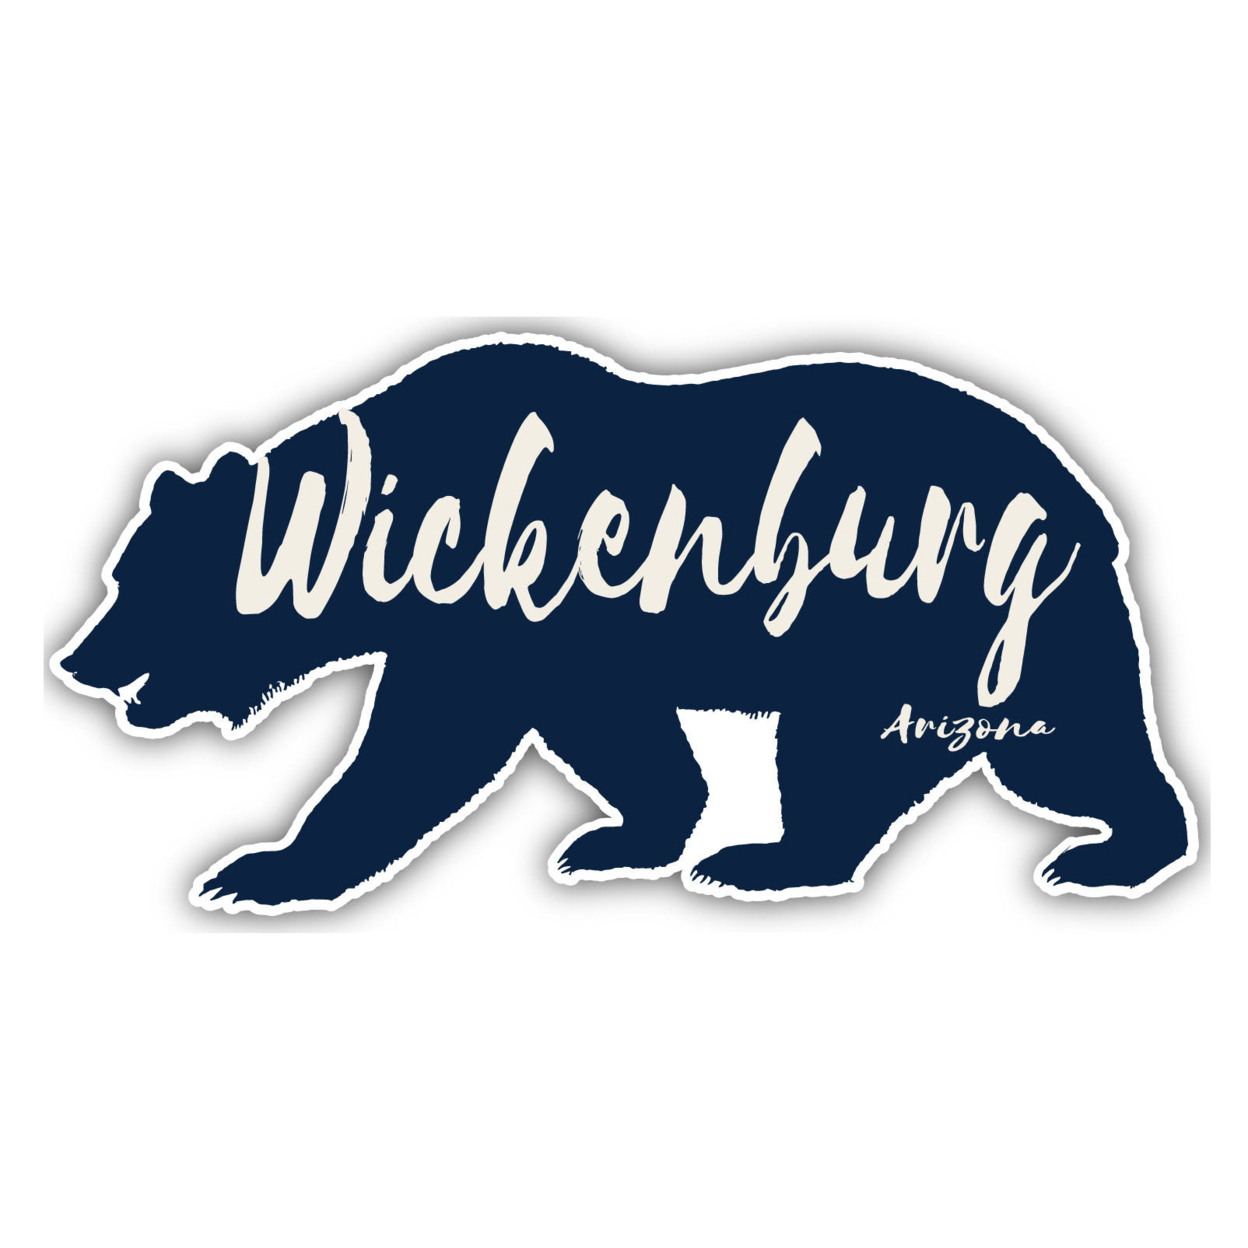 Wickenburg Arizona Souvenir Decorative Stickers (Choose Theme And Size) - Single Unit, 4-Inch, Bear